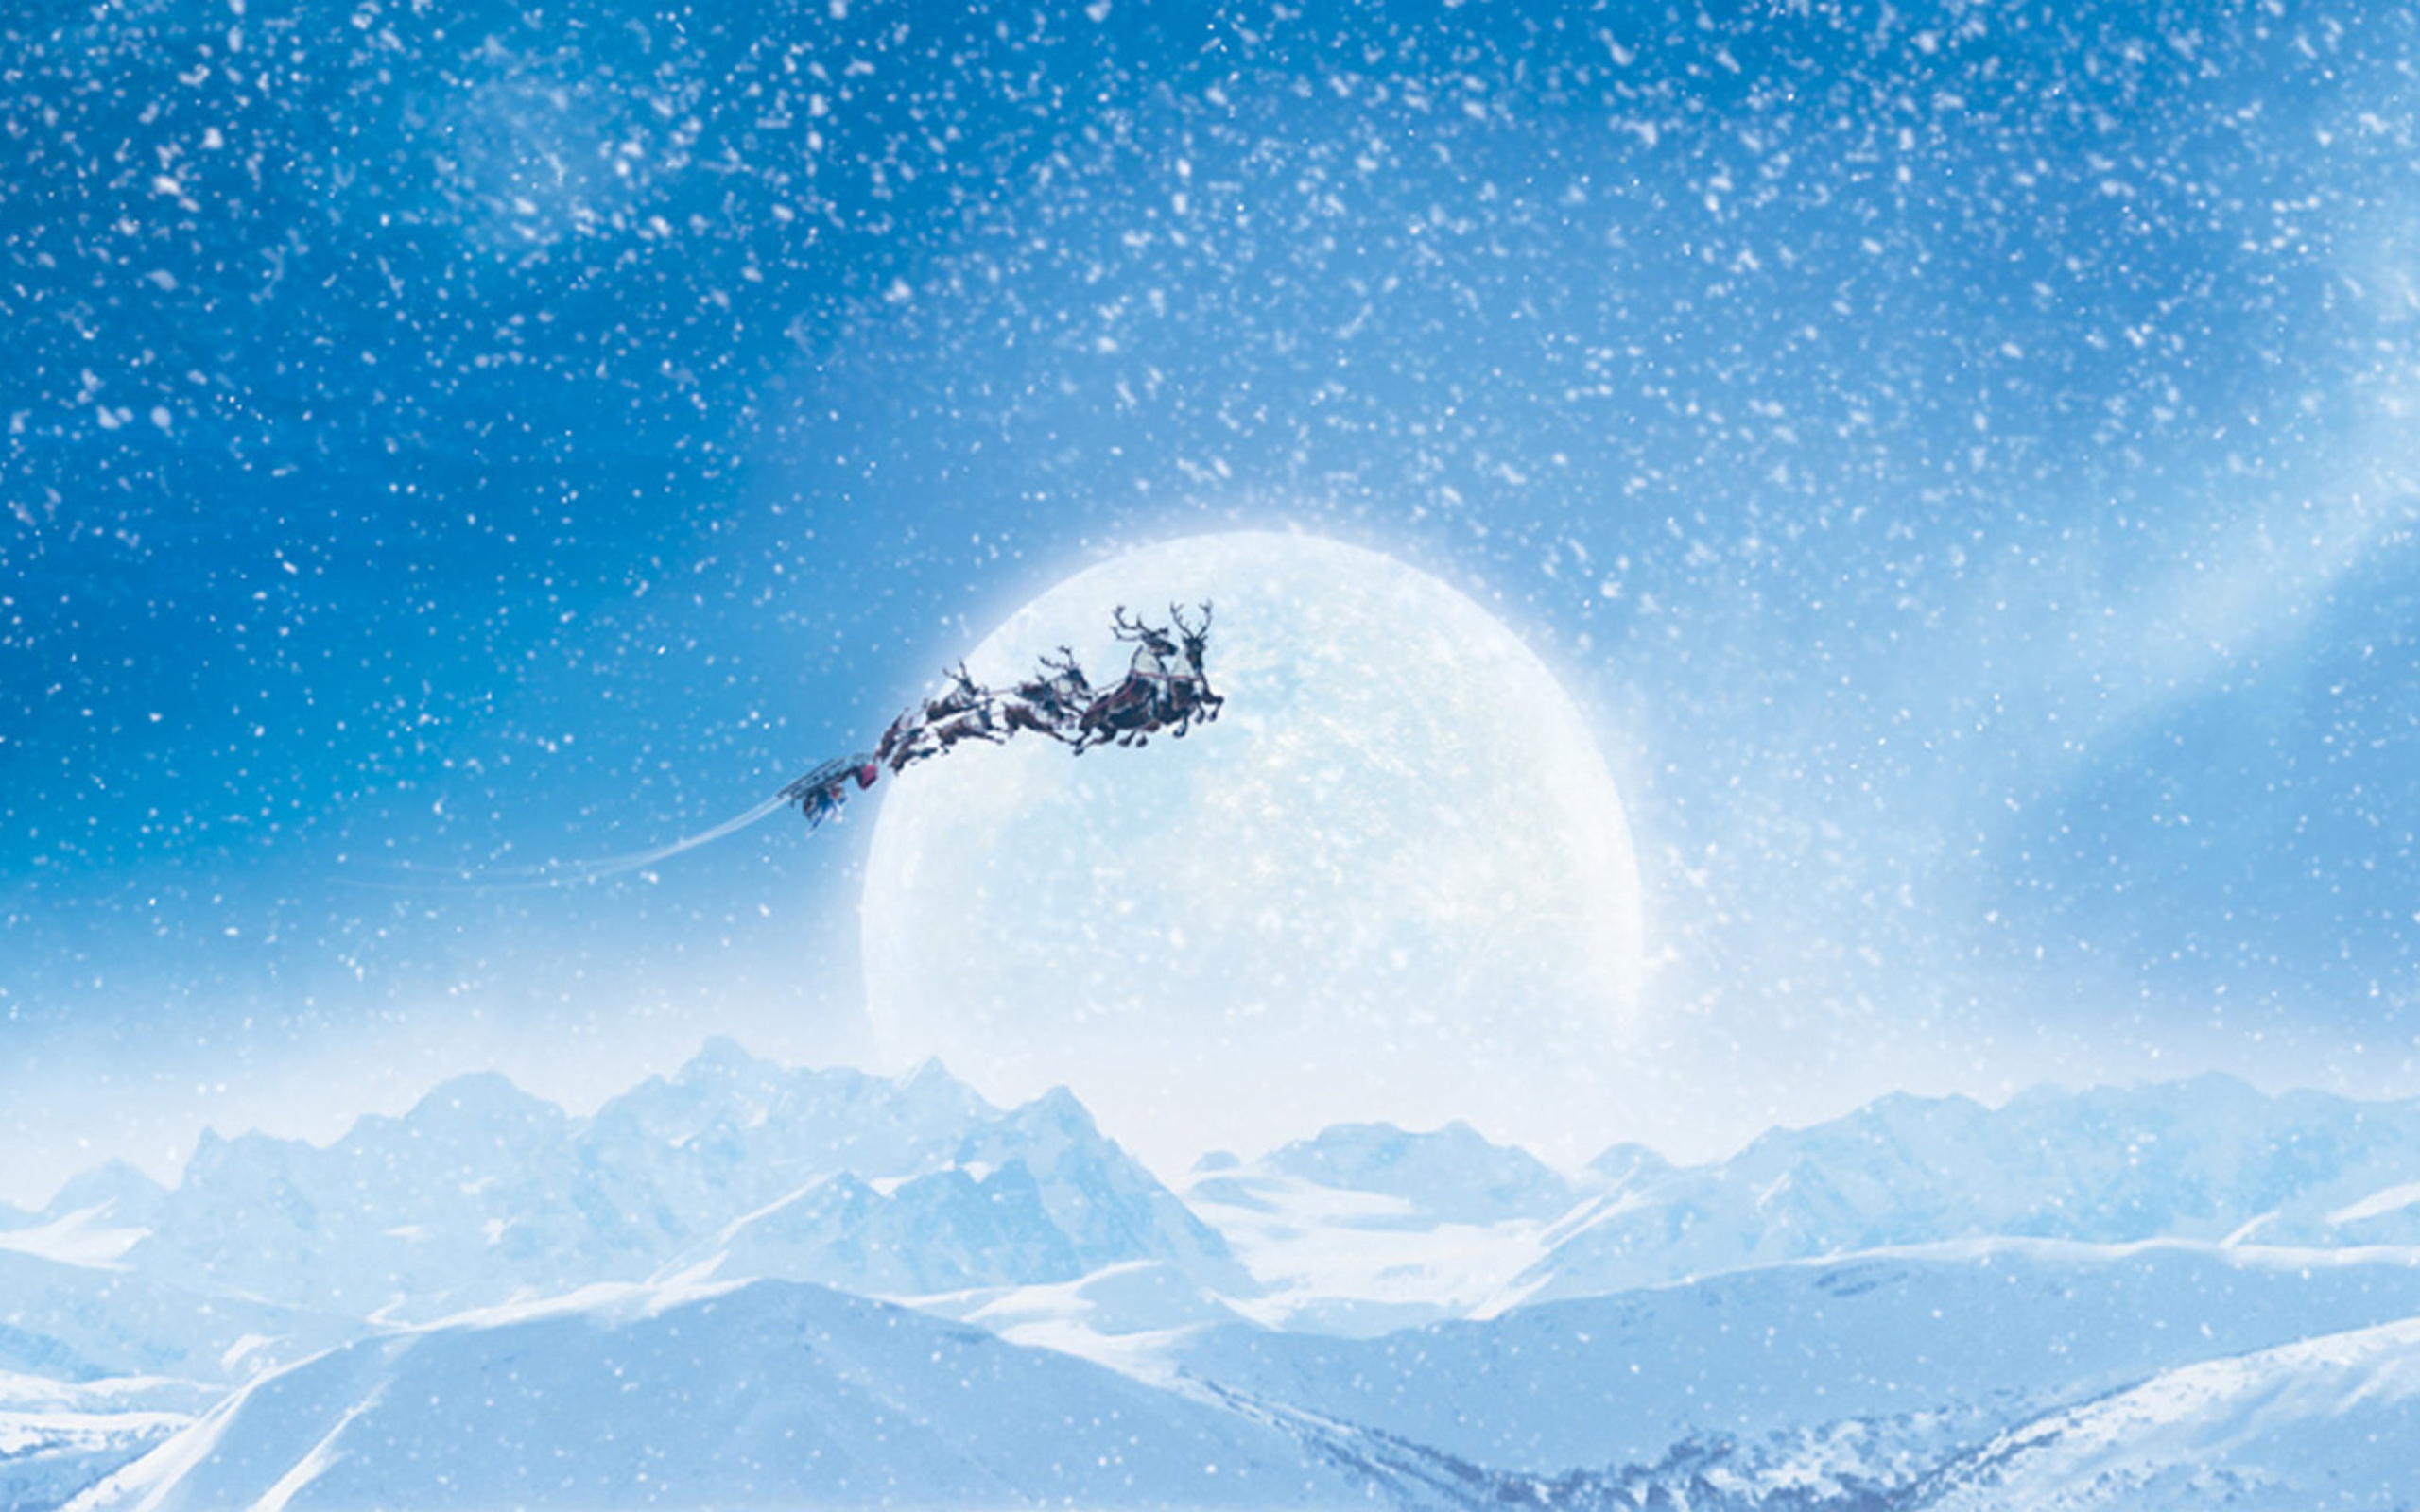 Das Santa's Sleigh And Reindeers Wallpaper 2560x1600